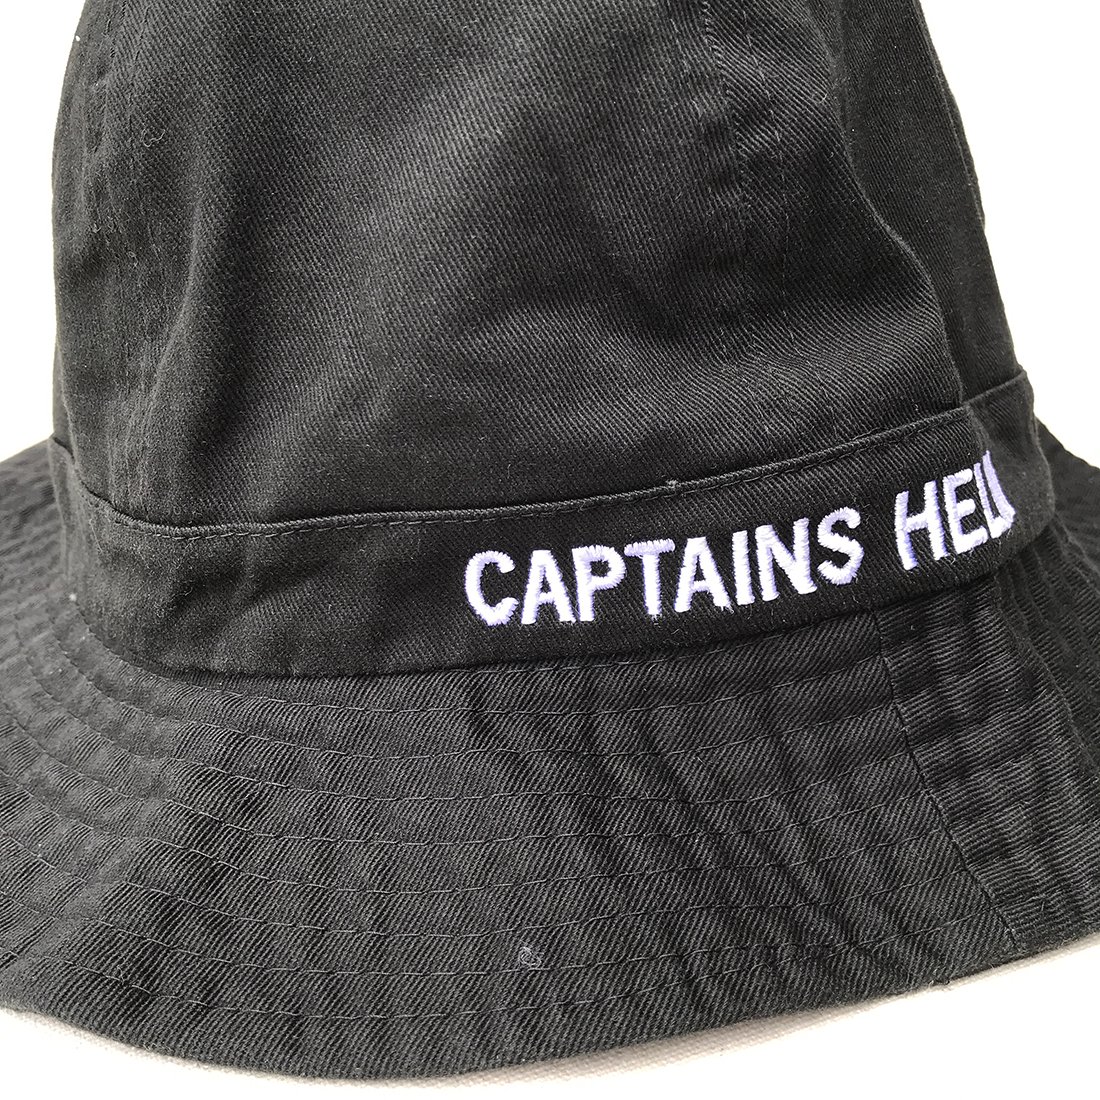 CAPTAINS HELM #TRADEMARK BALL HAT - CAPTAINS HELM WEB STORE